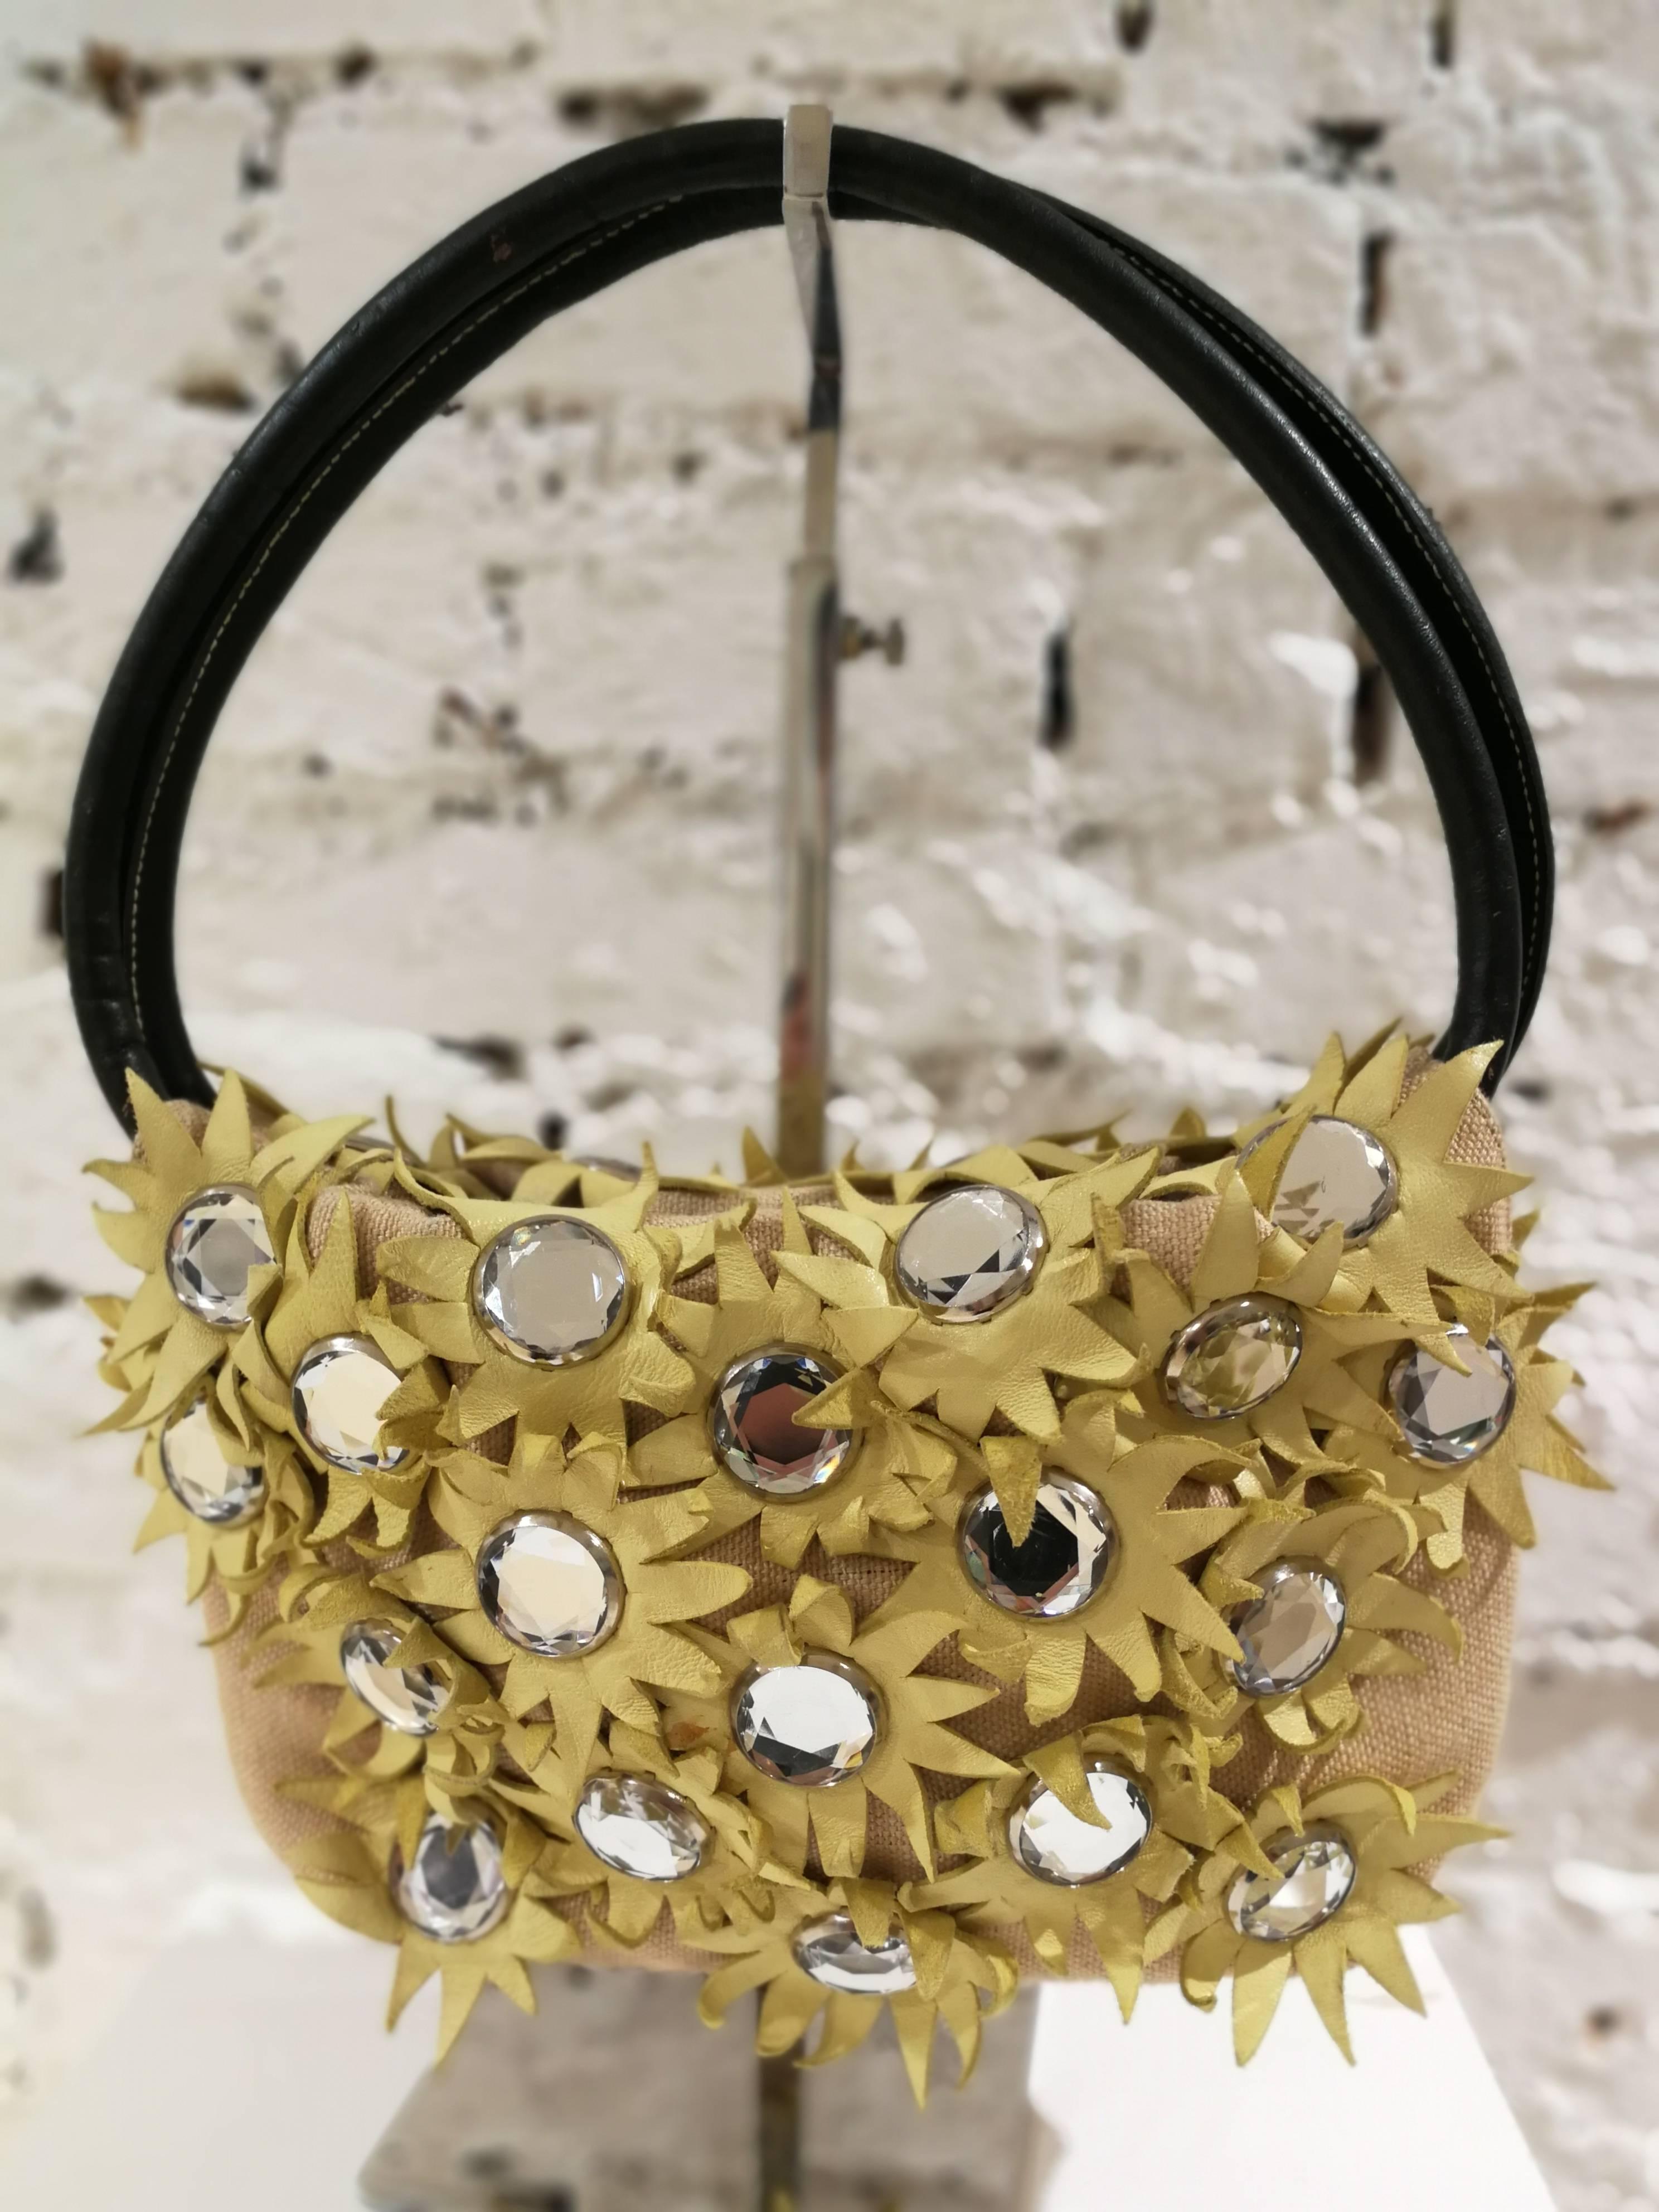 Sonia Rykiel daisies limited edition shoulder bag 1